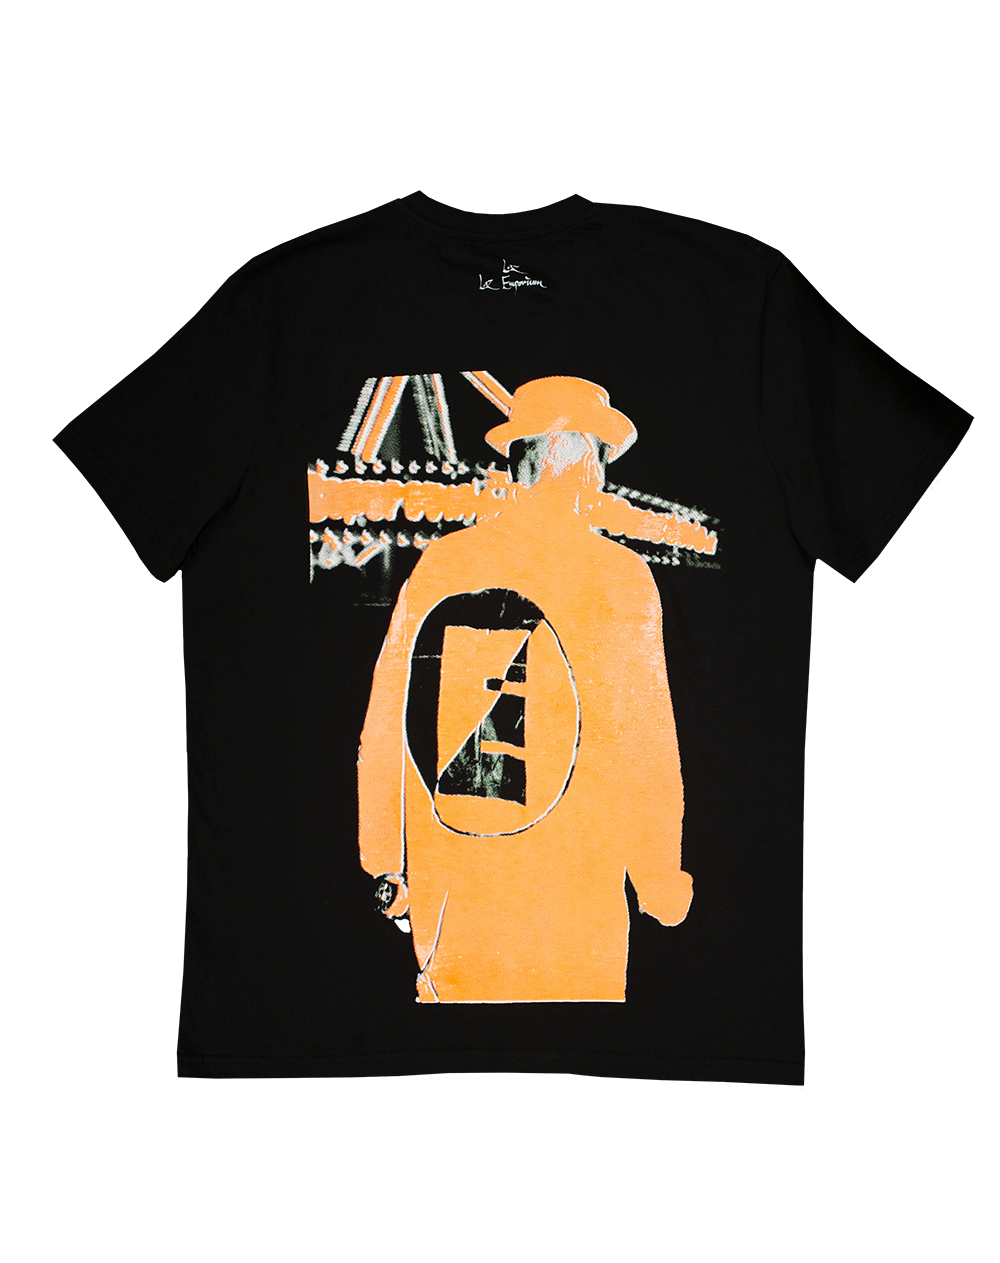 Es are Good Orange T-shirt Edition